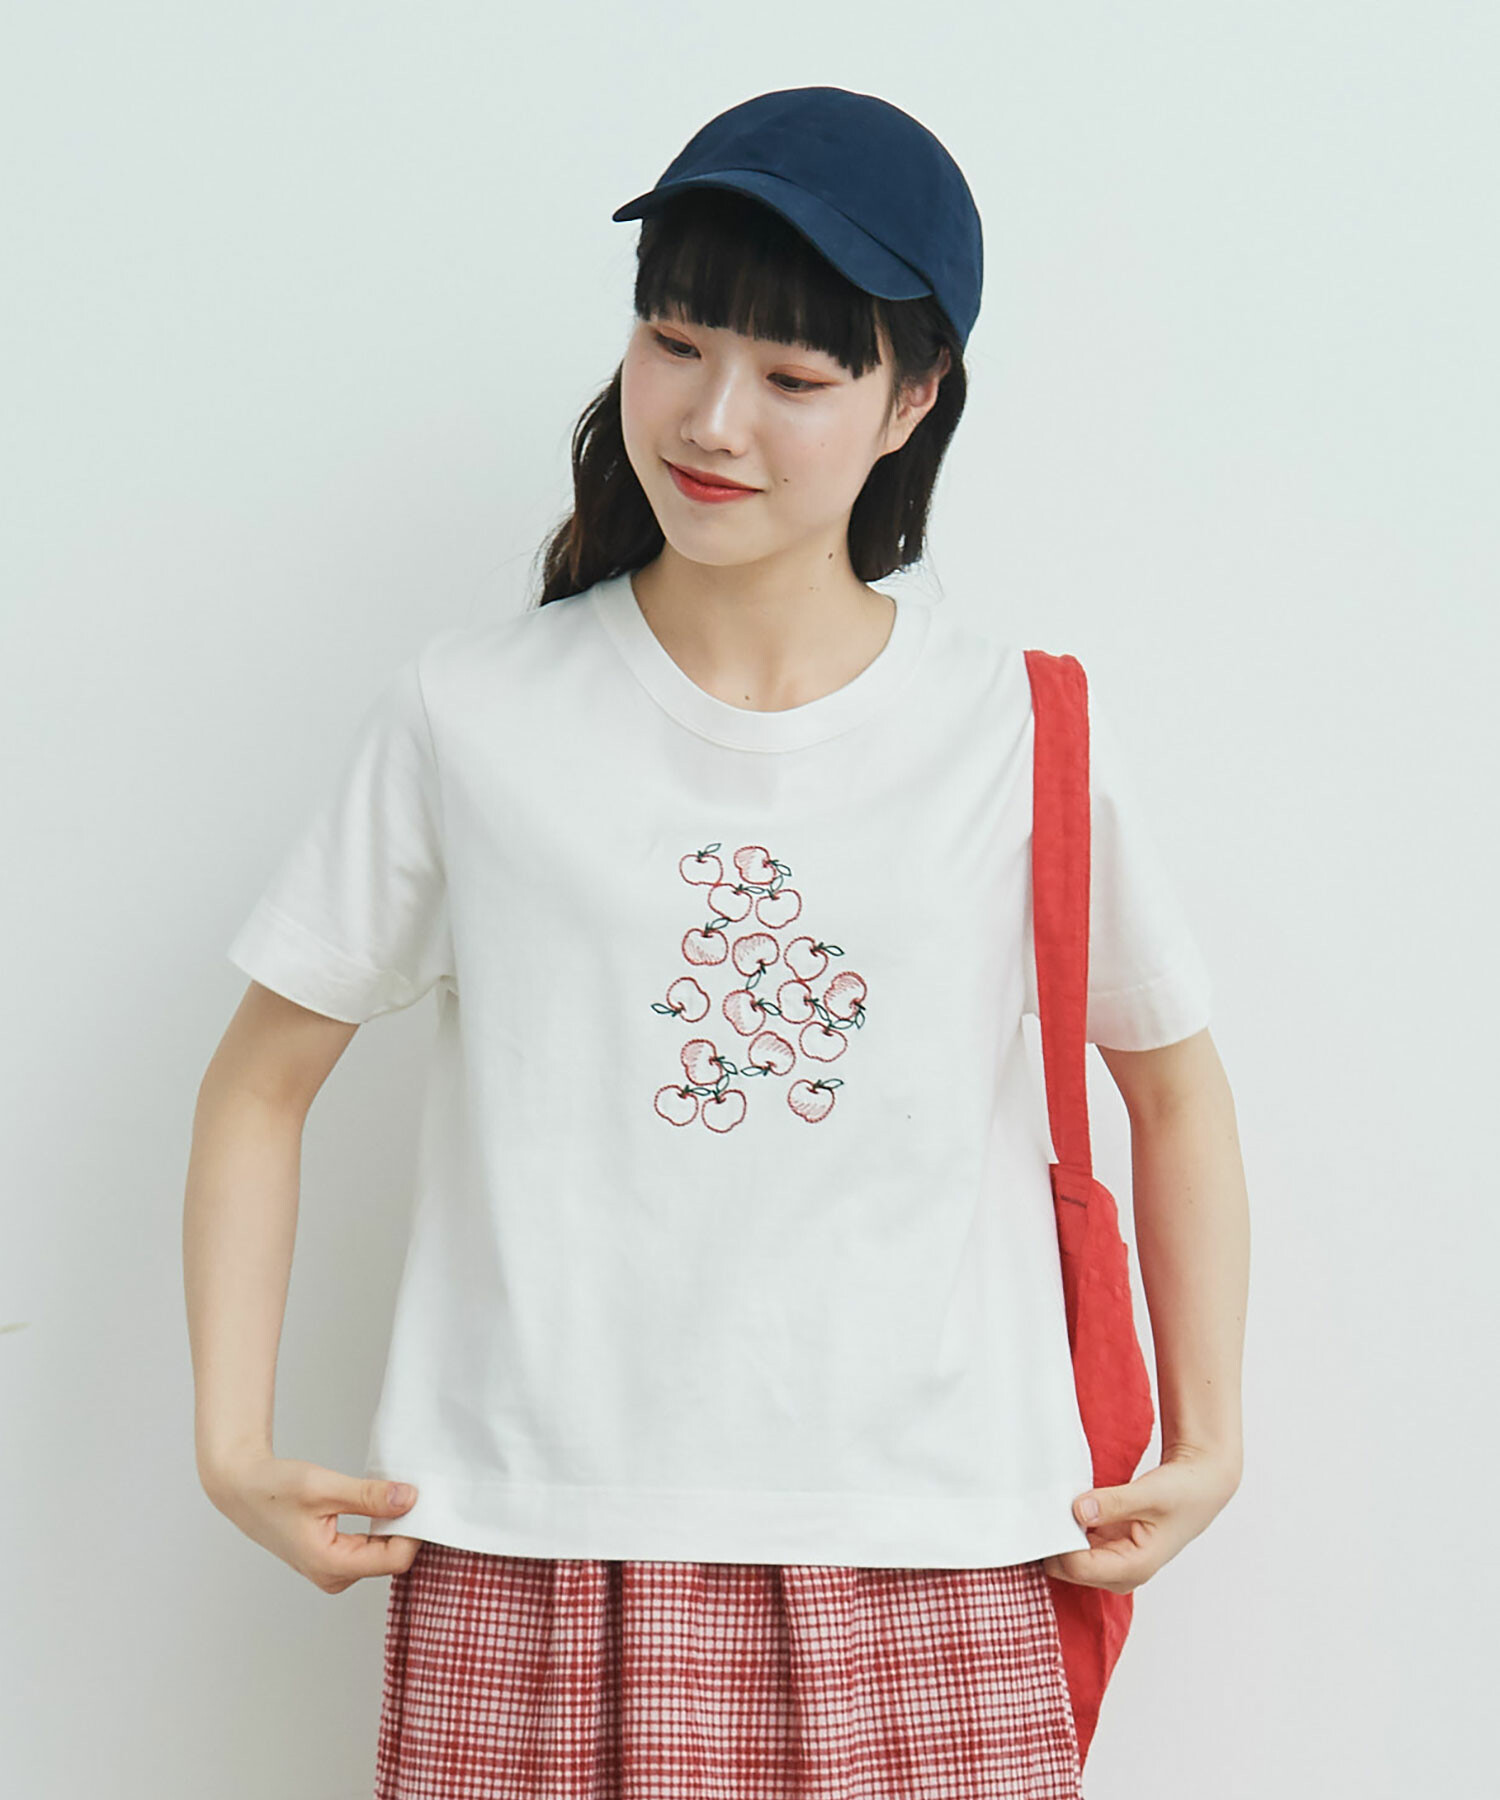 AMBIDEX Store ○korokorofruit りんご Tシャツ(F シロ): bulle de savon